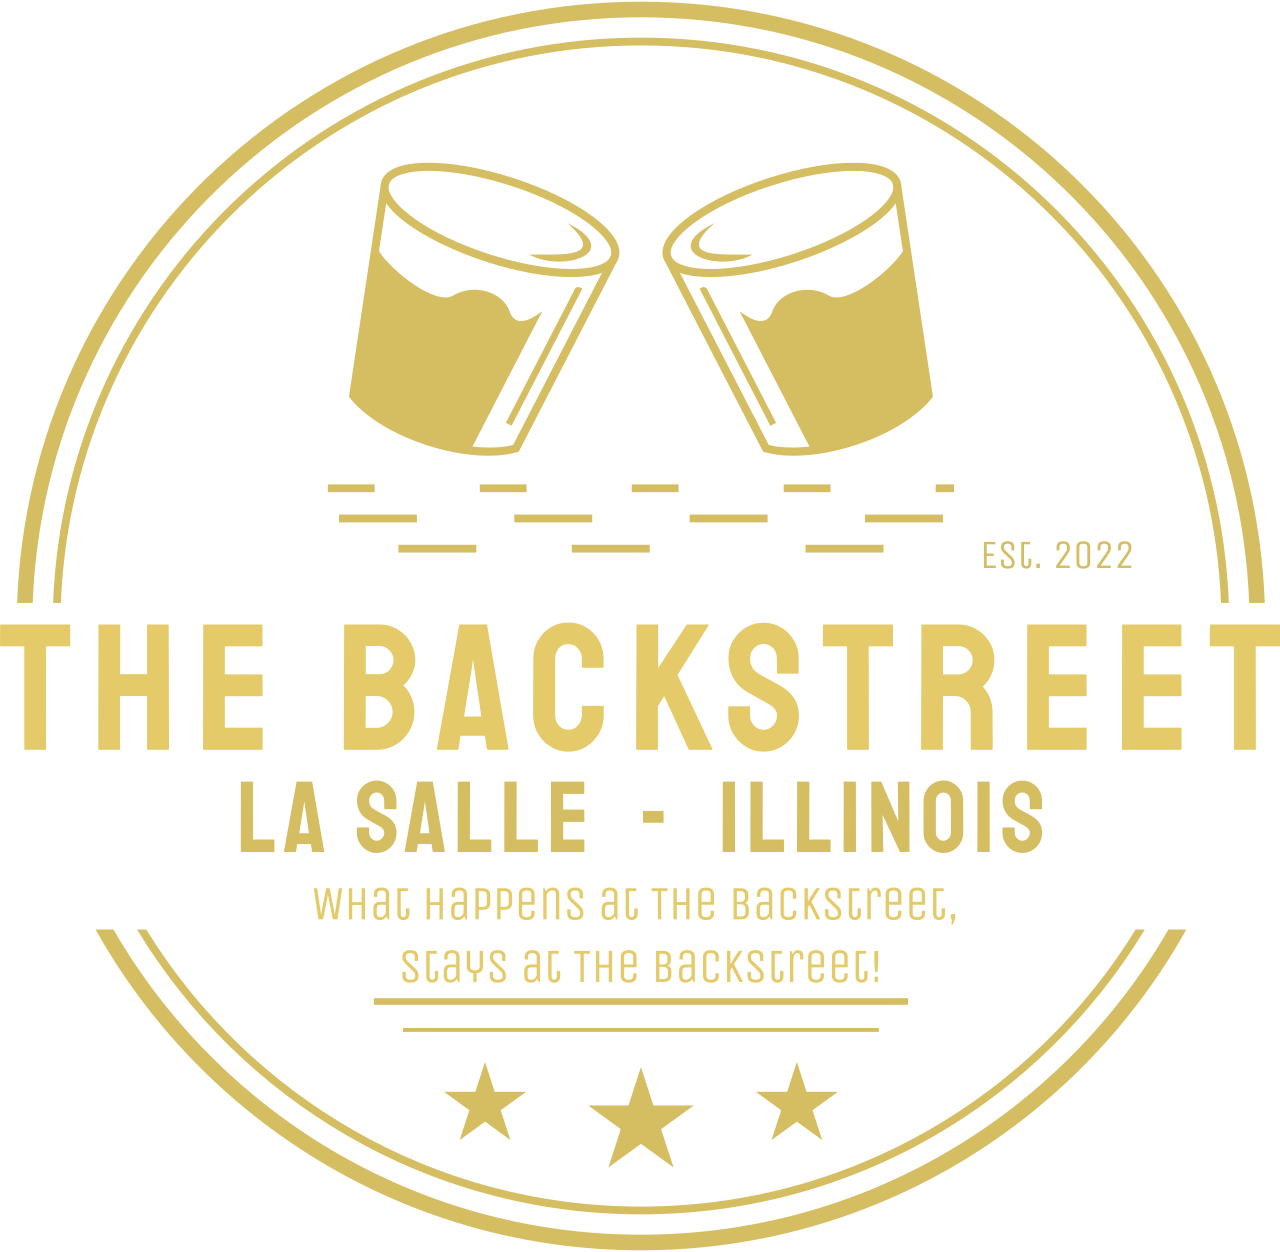 The Backstreet's logo